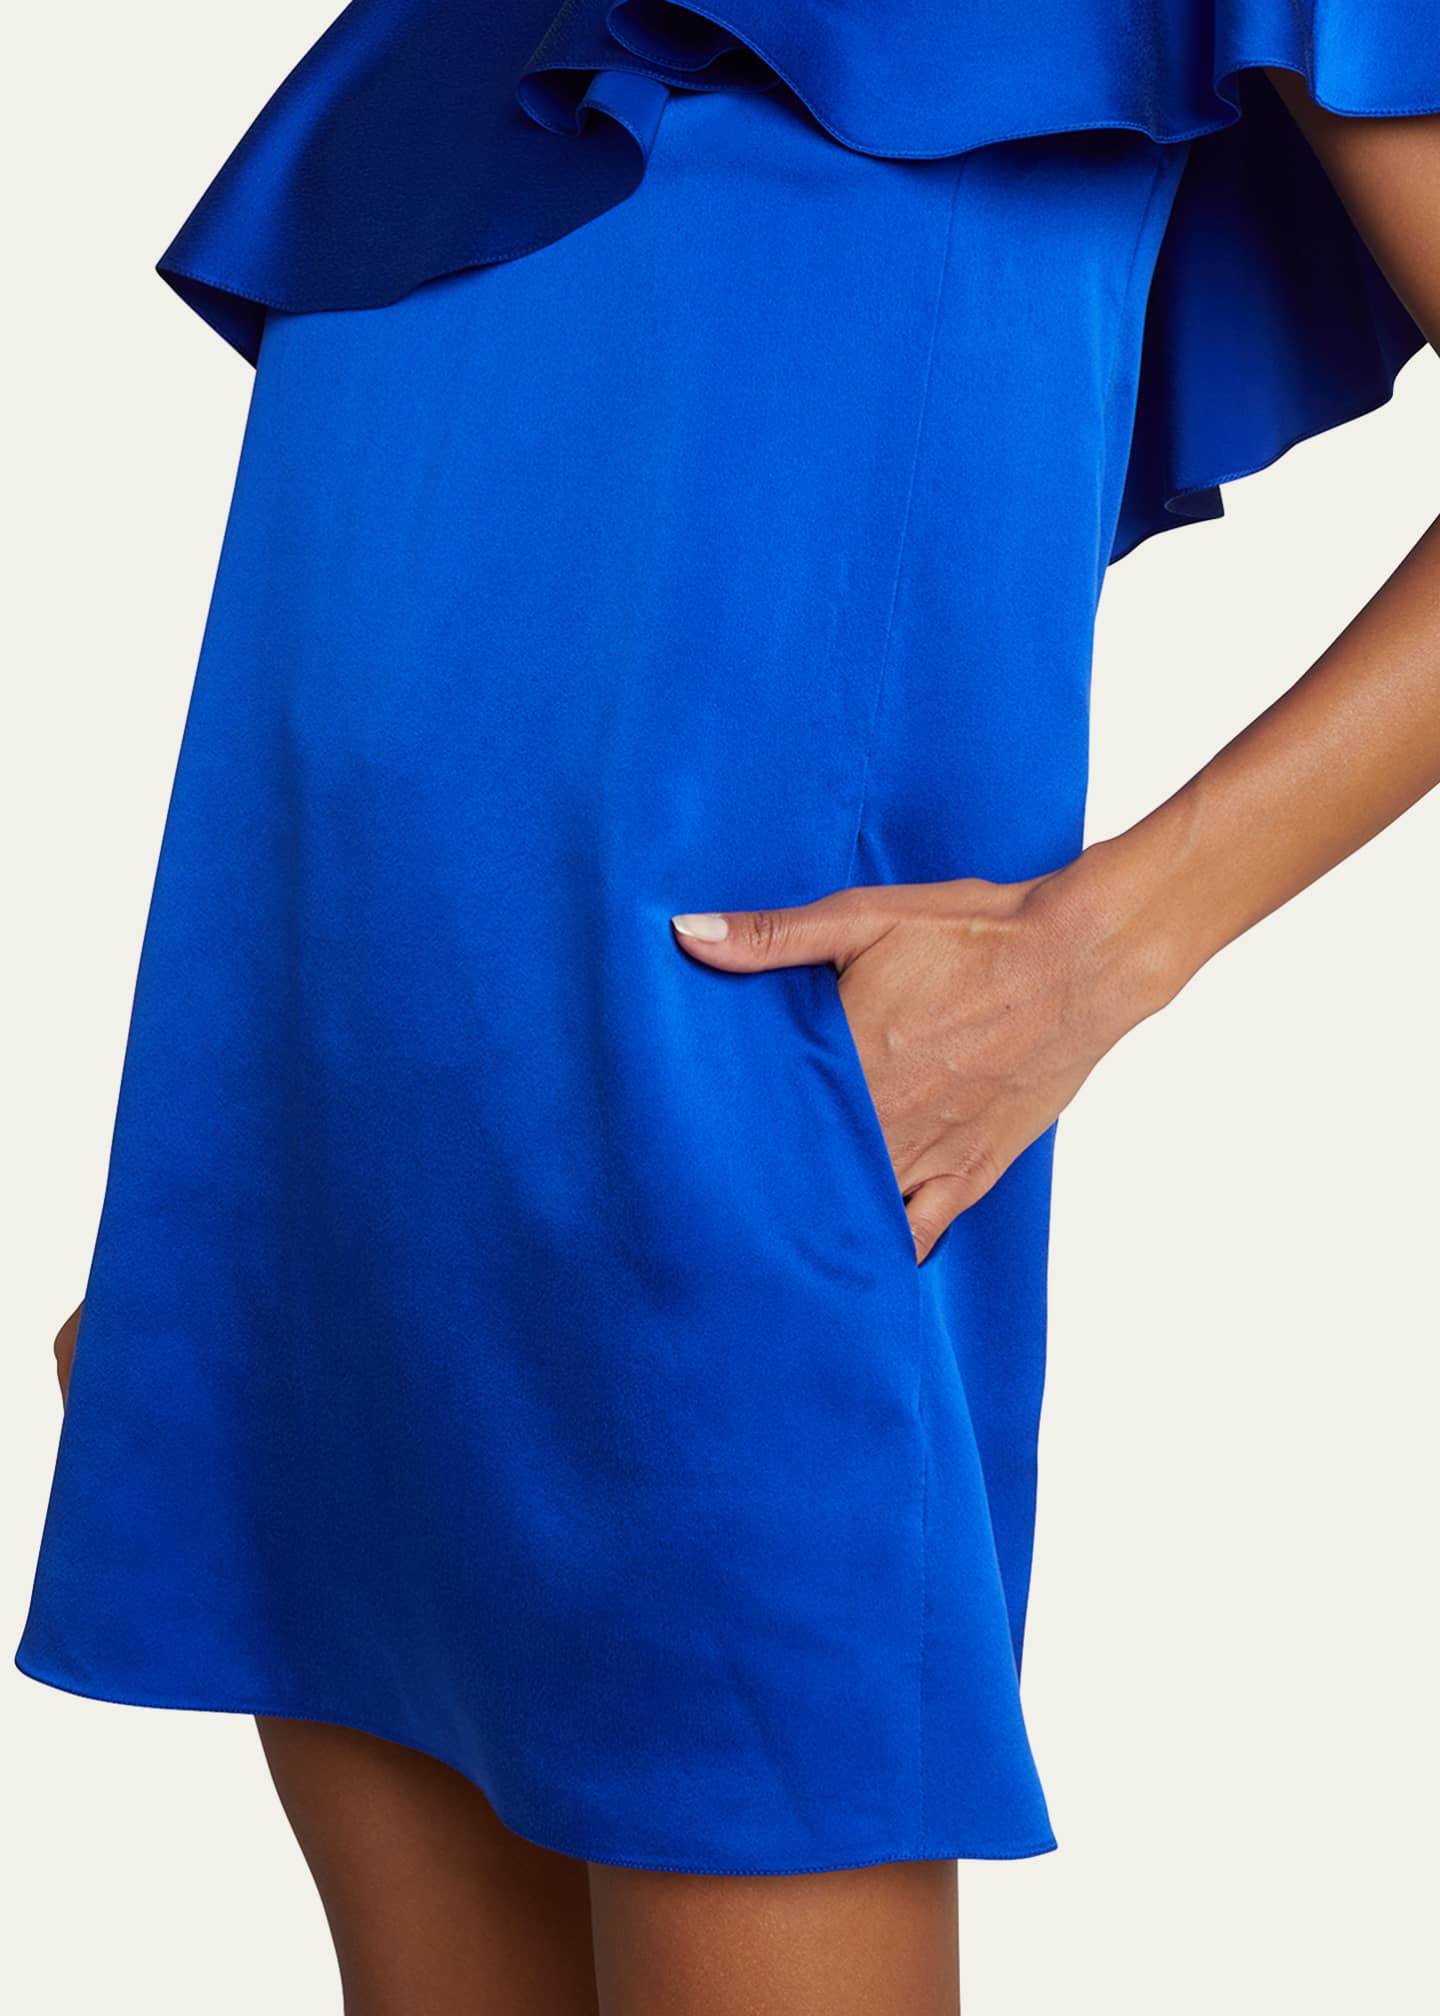 Ruffled Mini Dress - Blue One-Shoulder Dress - Cobalt Blue Dress